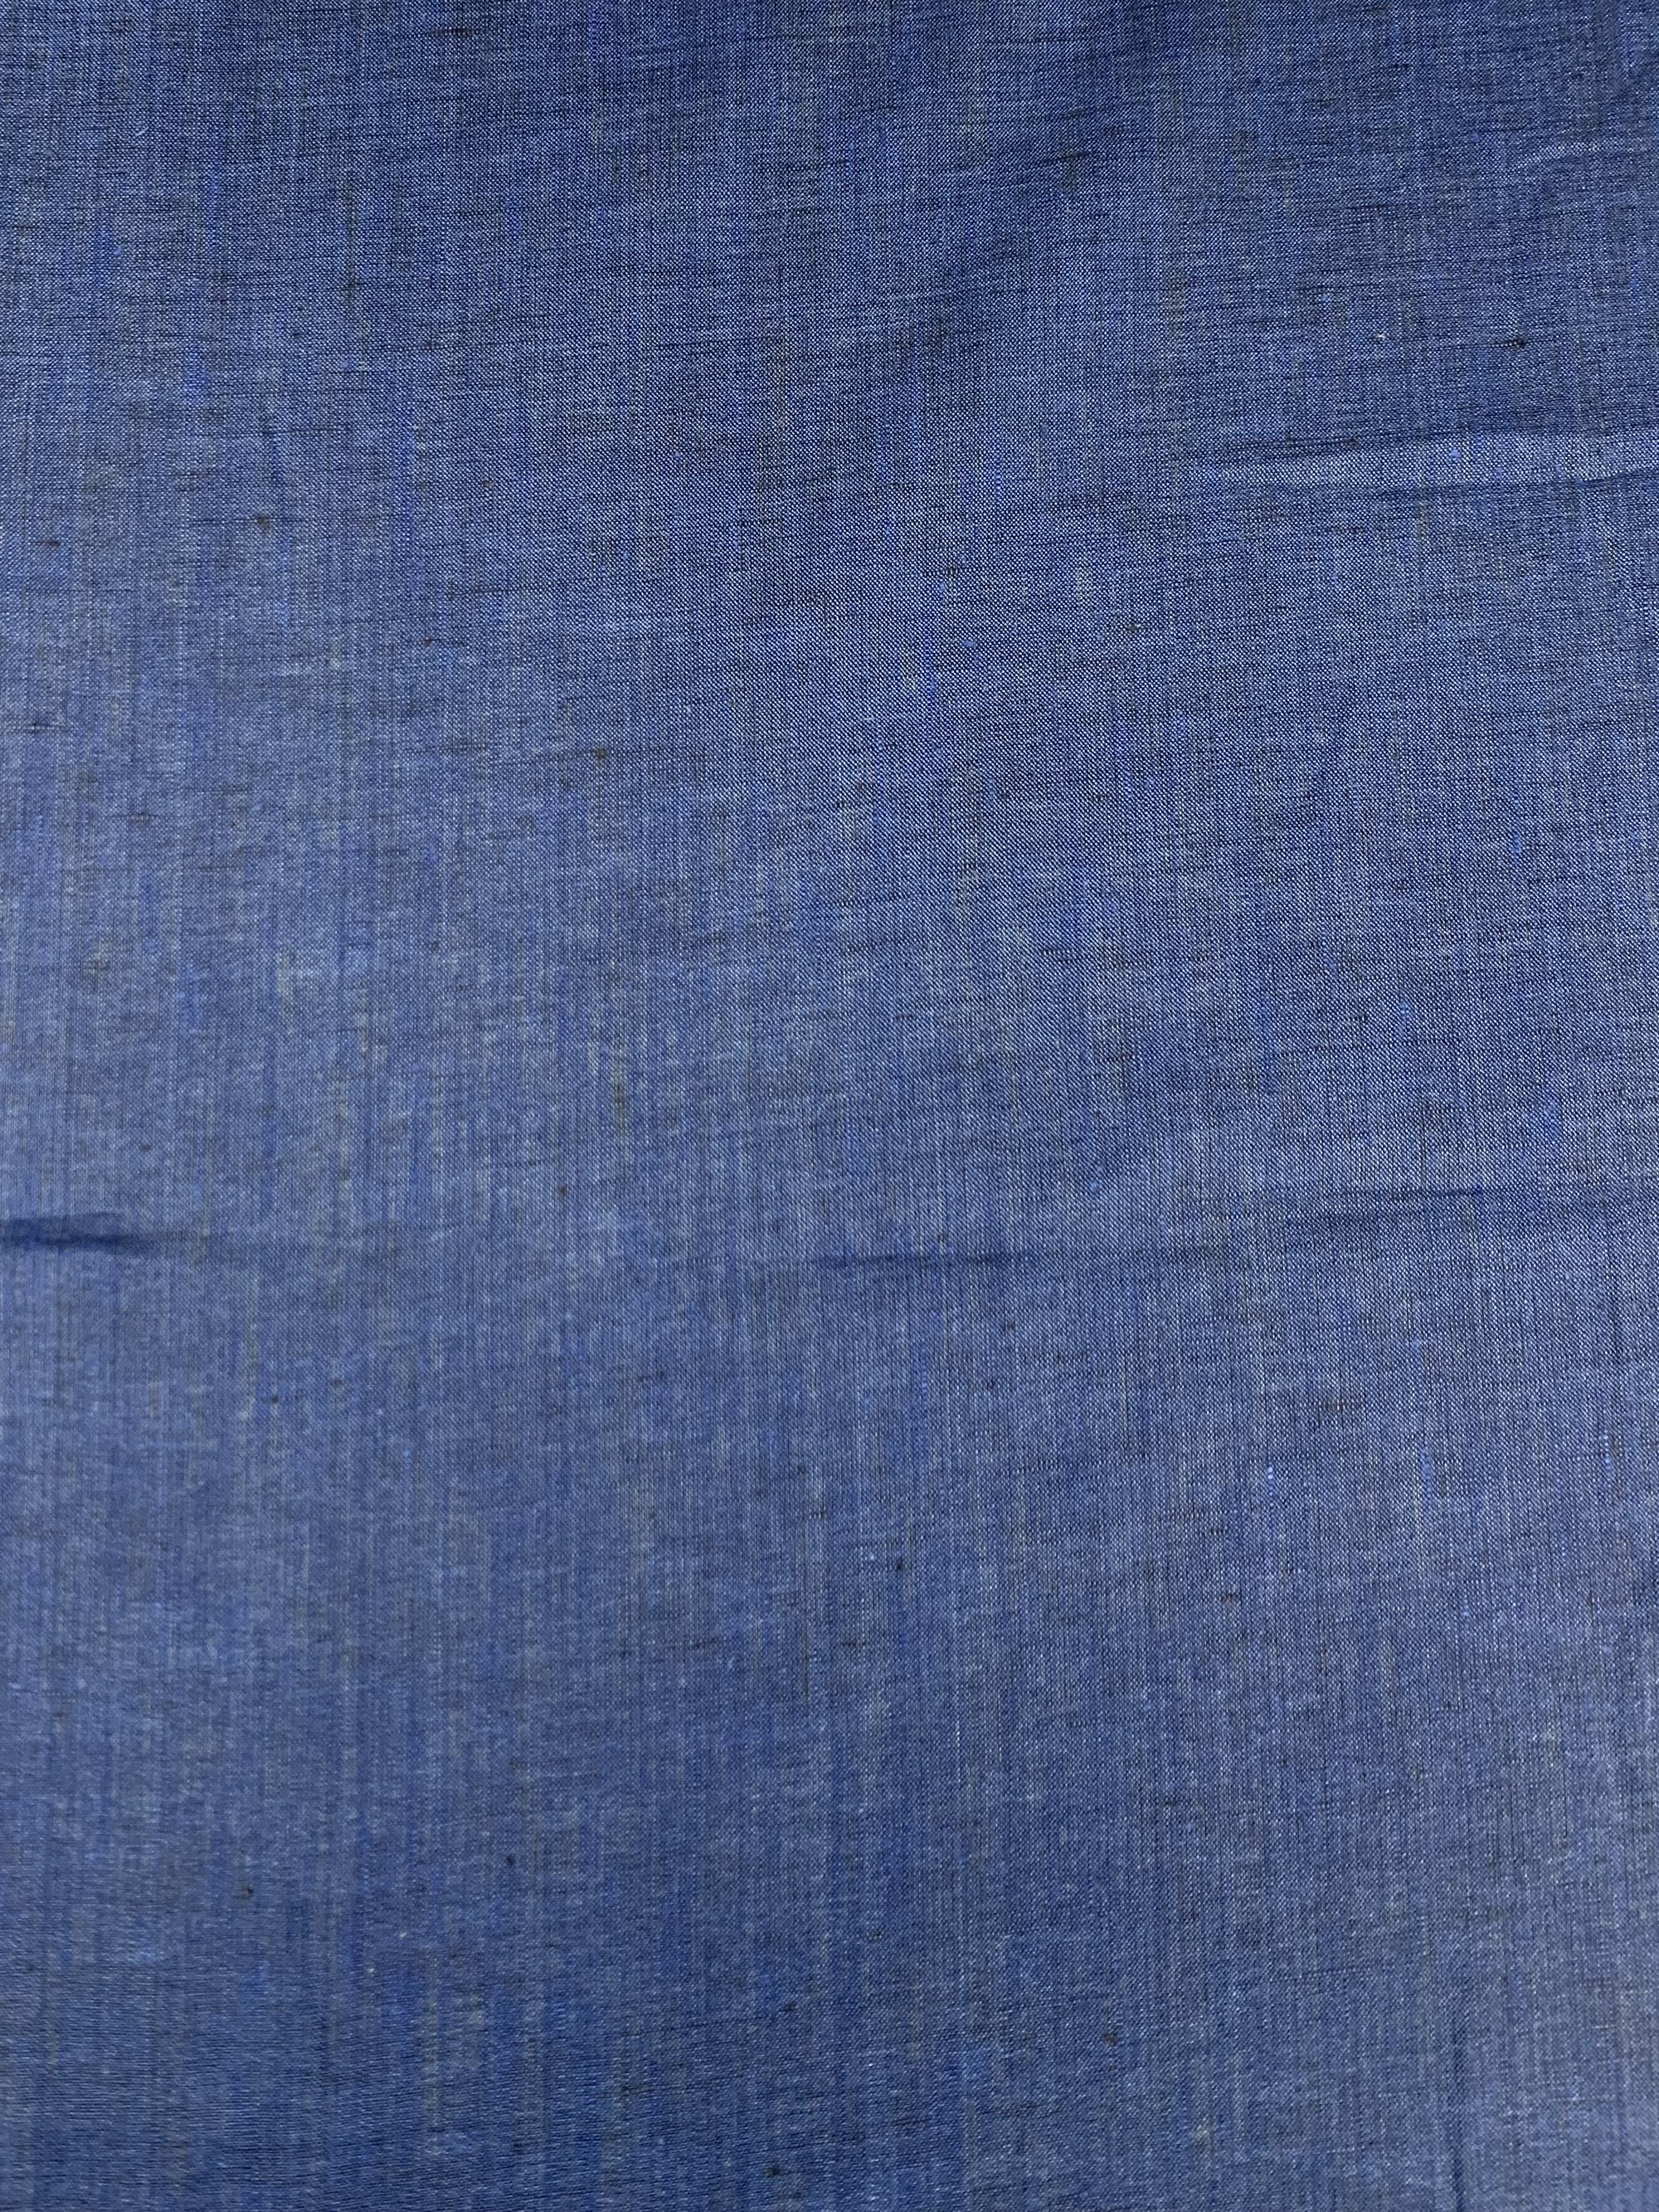 Cobalt blue linen fabric laid flat.